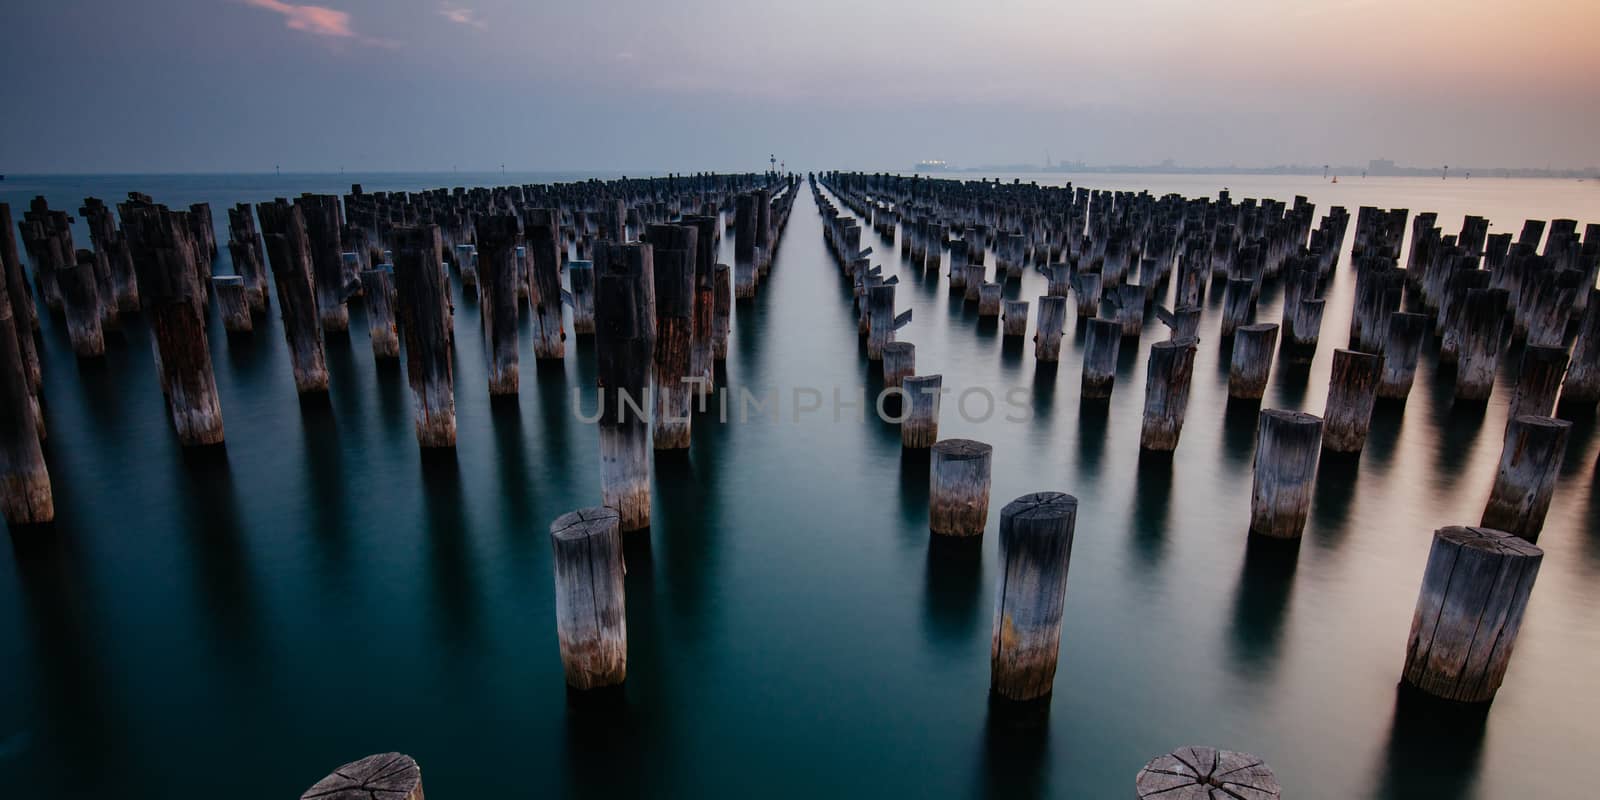 Princes Pier in Port Melbourne Australia by FiledIMAGE